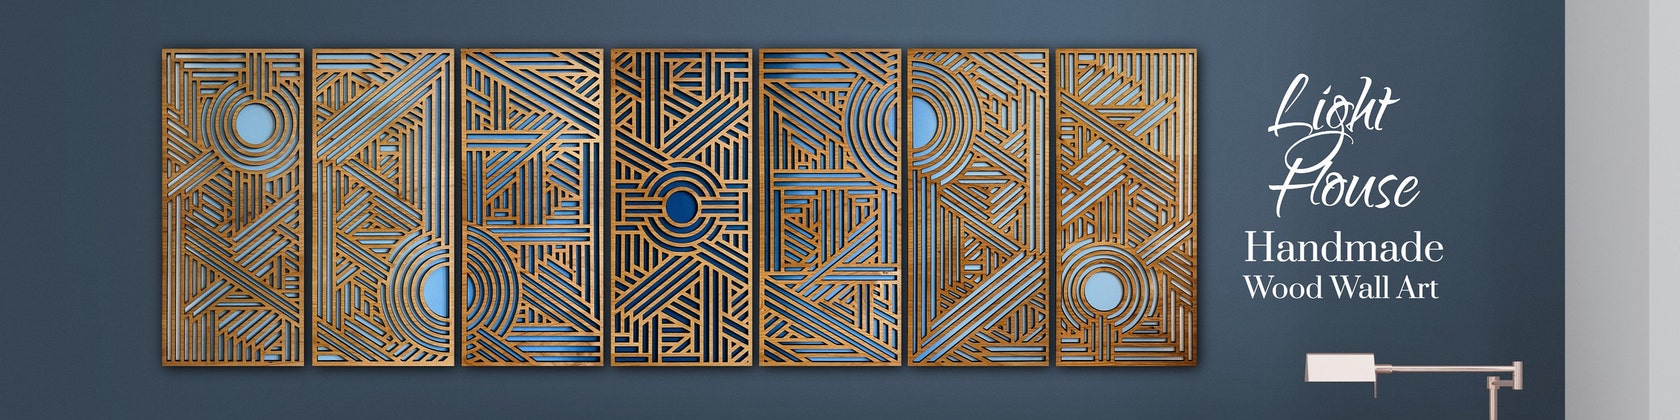 Geometric Wall Art, All Wood Art Deco Decor, Handmade Horizontal 4 Panel